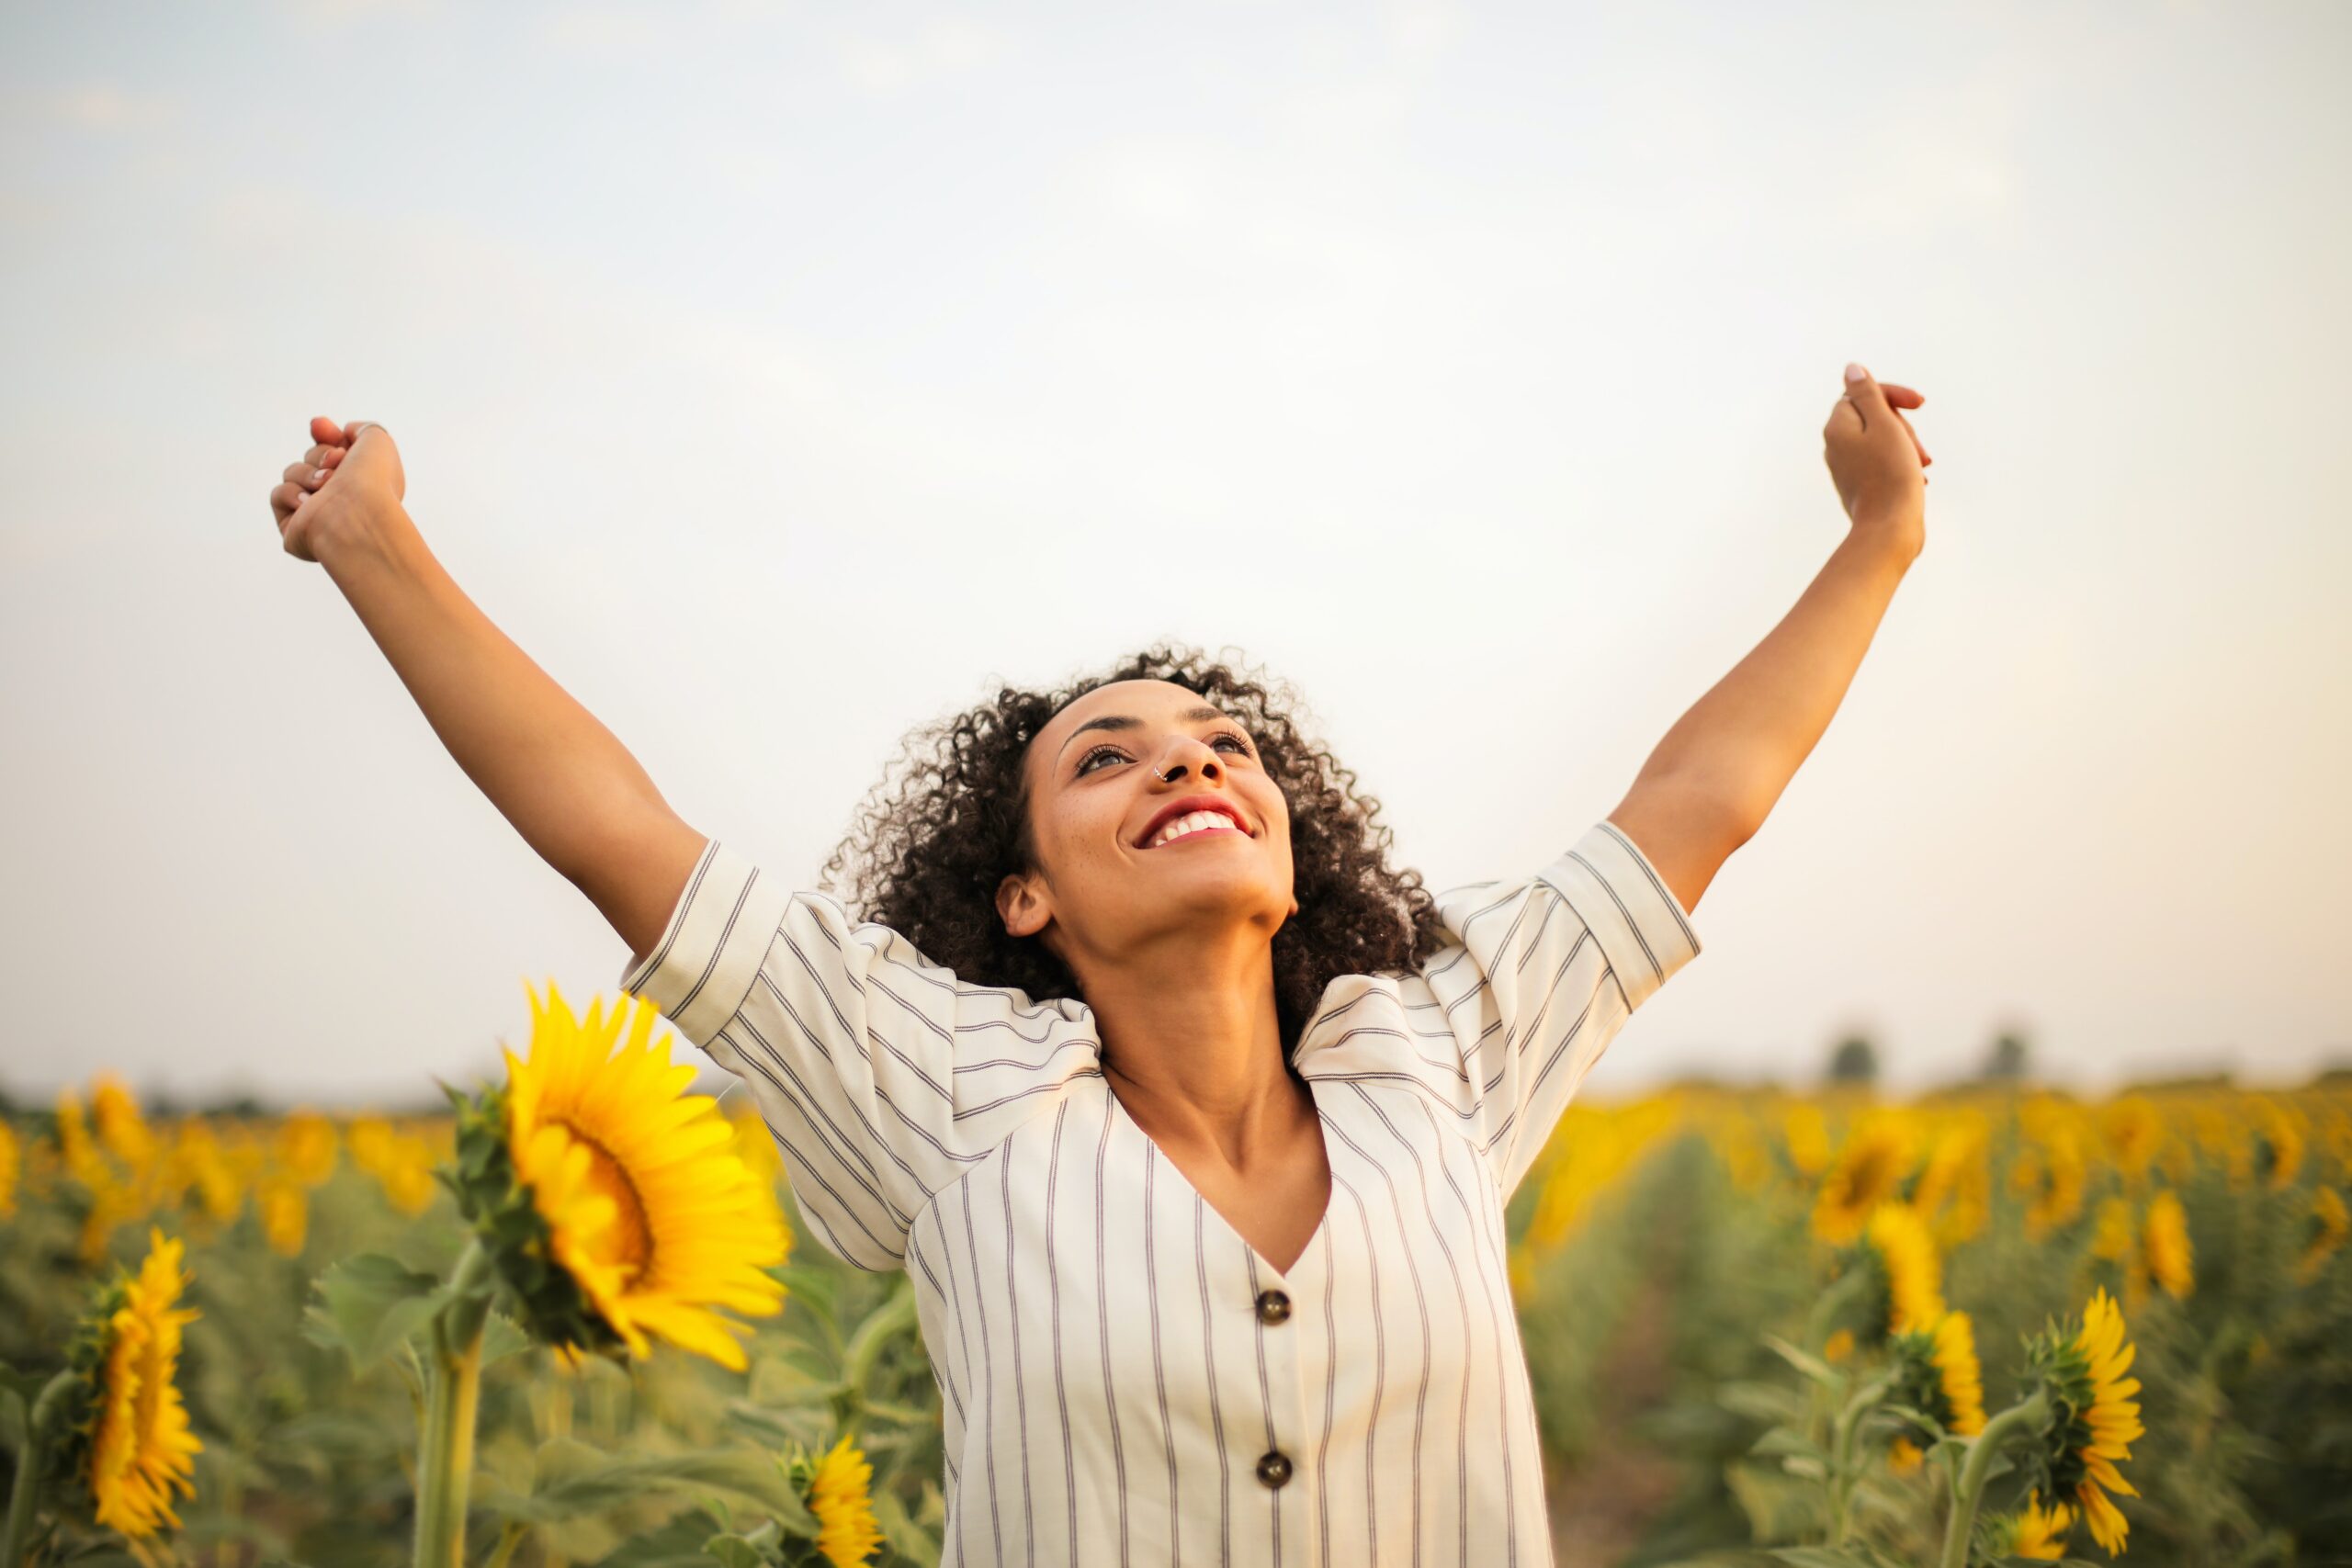 A happy woman runs through a field of sunflowers.